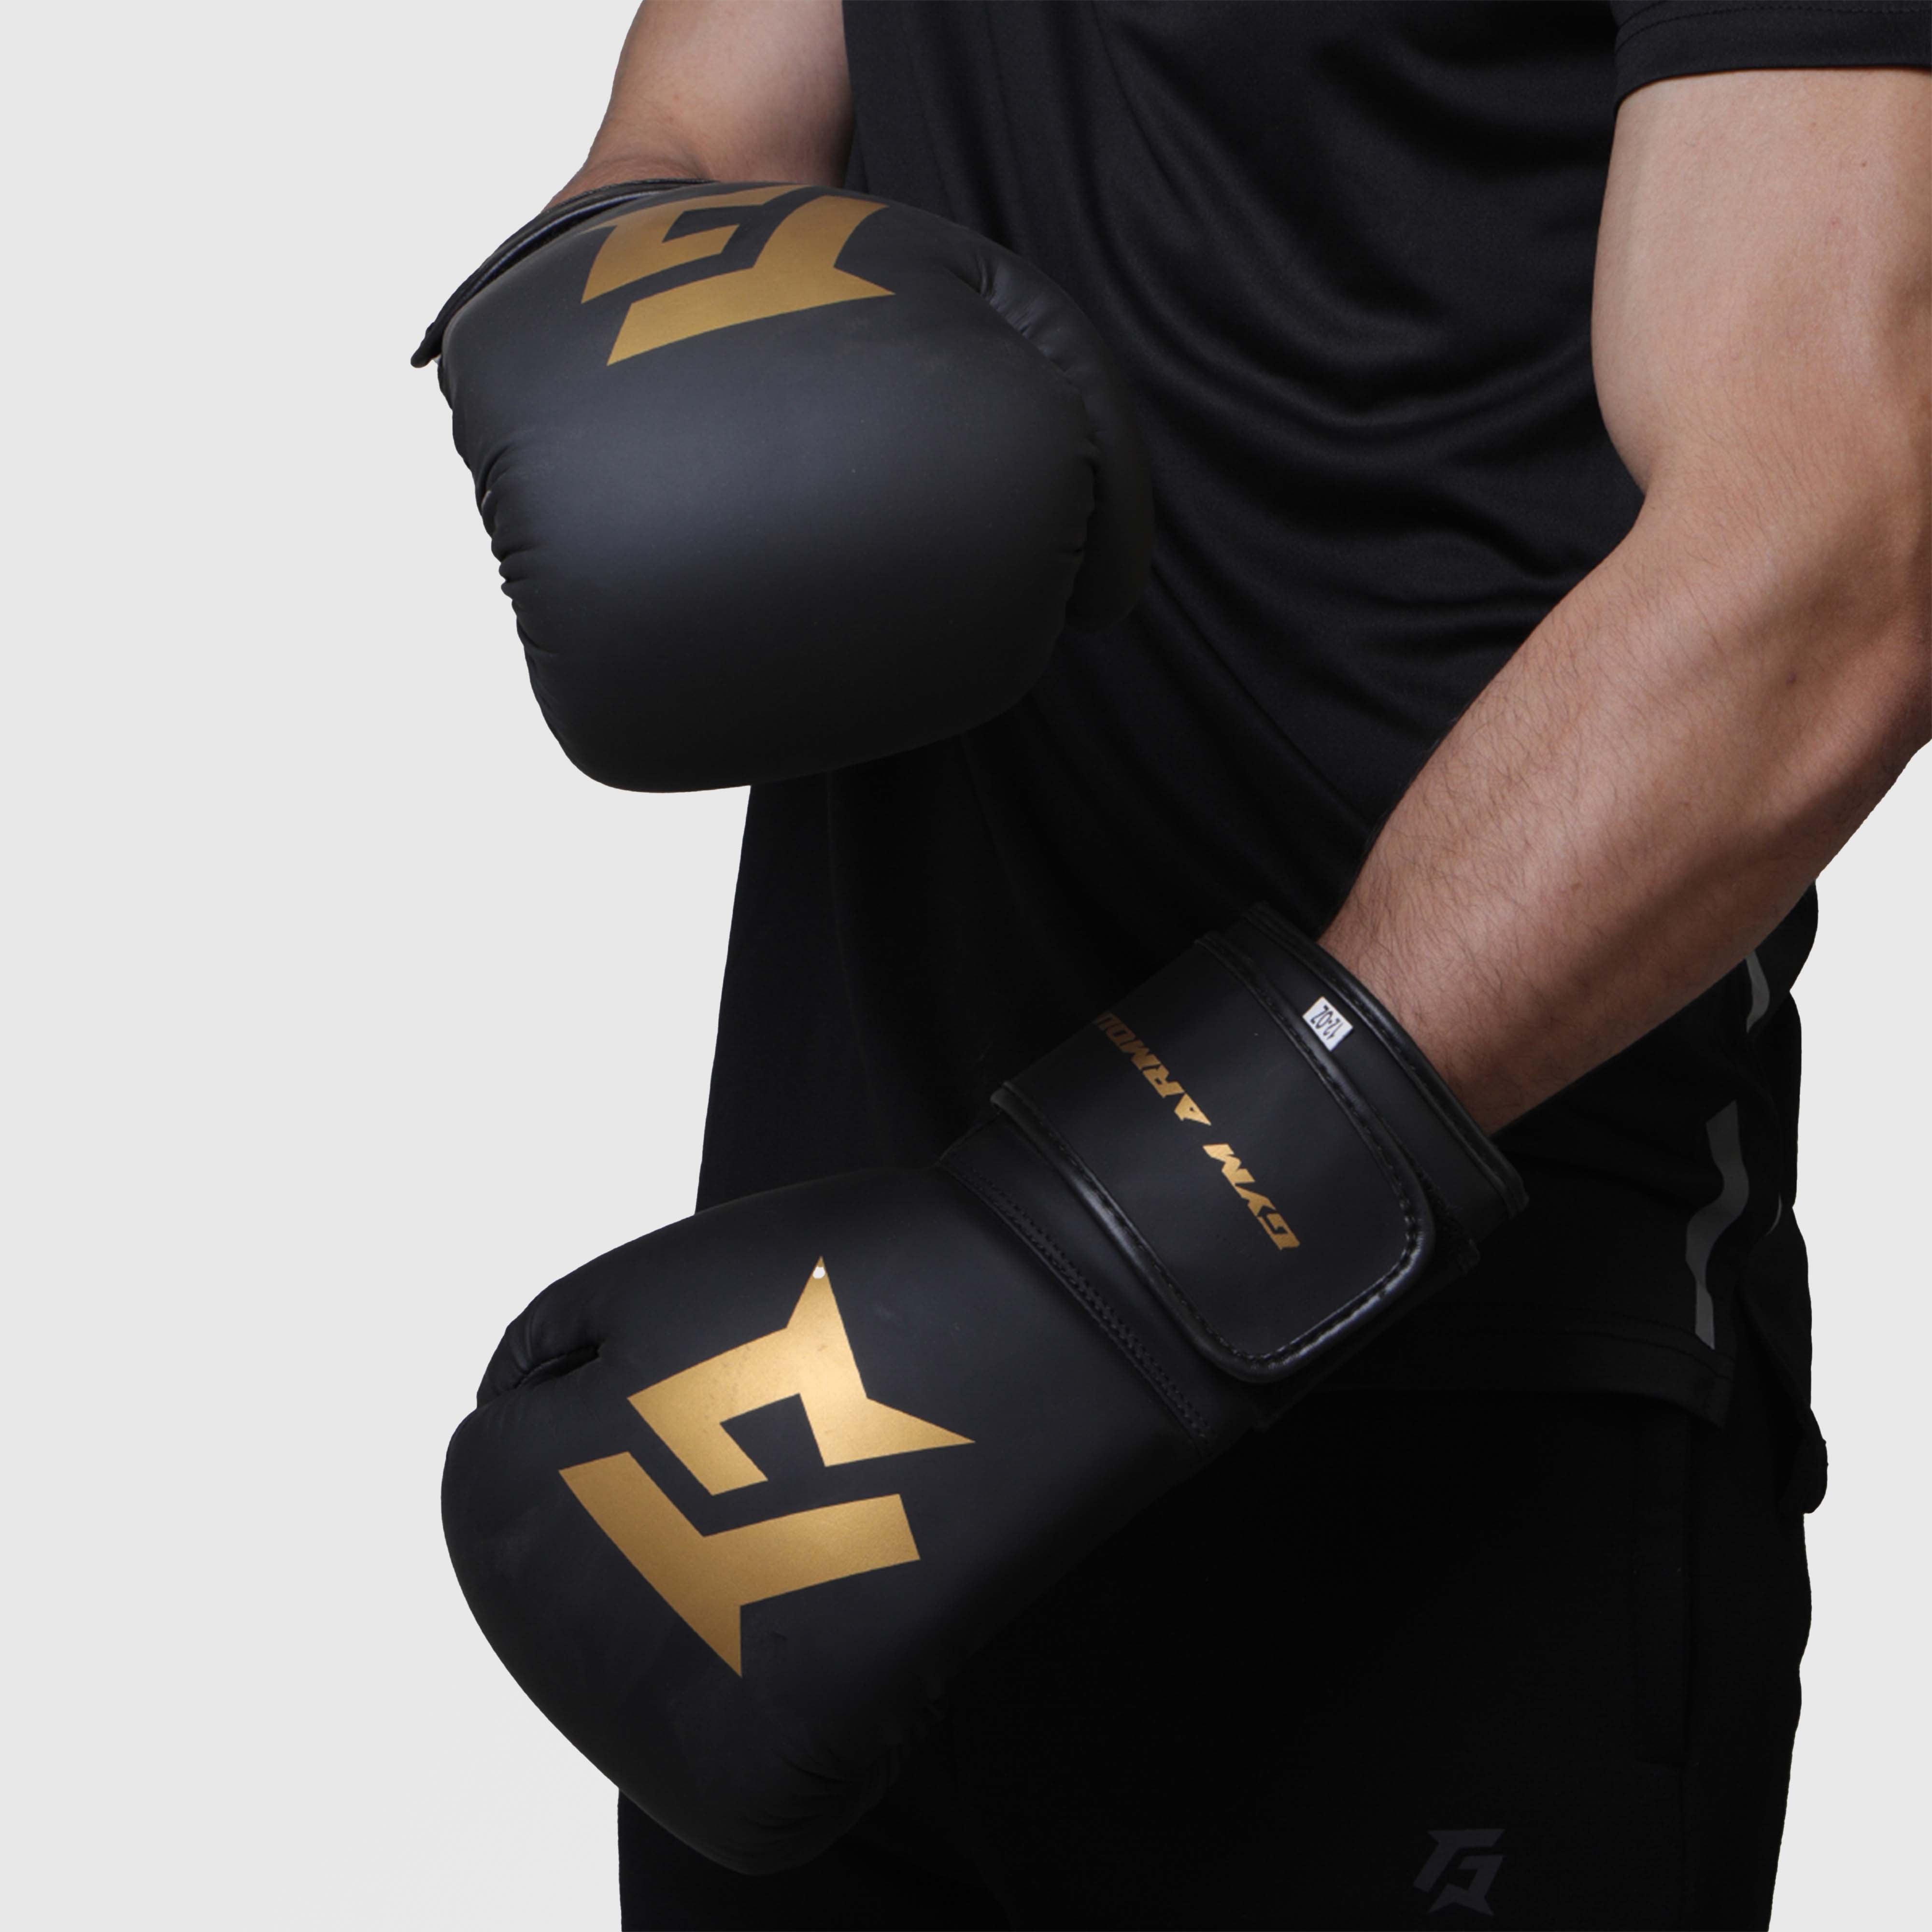 GA Boxing Gloves (Black)